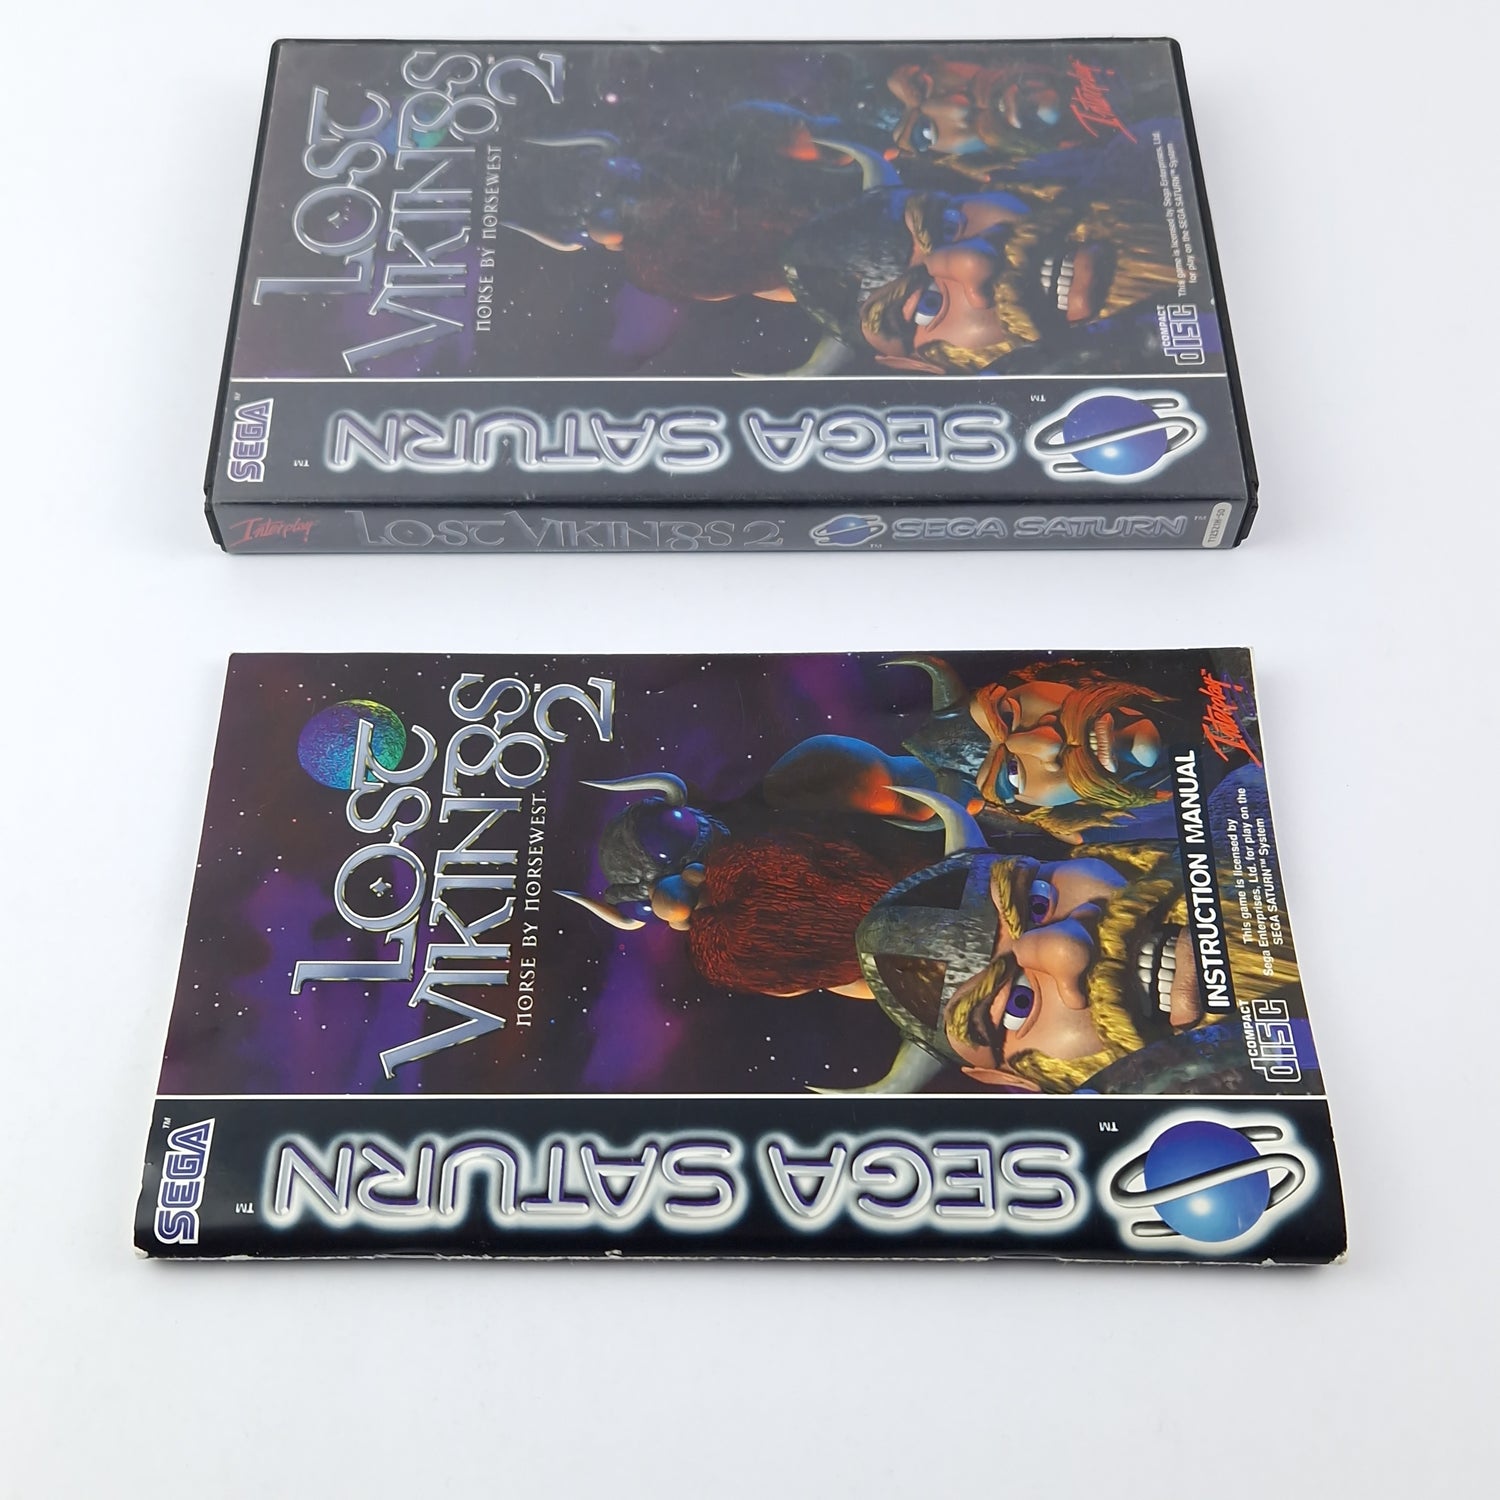 Sega Saturn Spiel : Lost Vikings 2 Norse by Norsewest - OVP Anleitung CD PAL